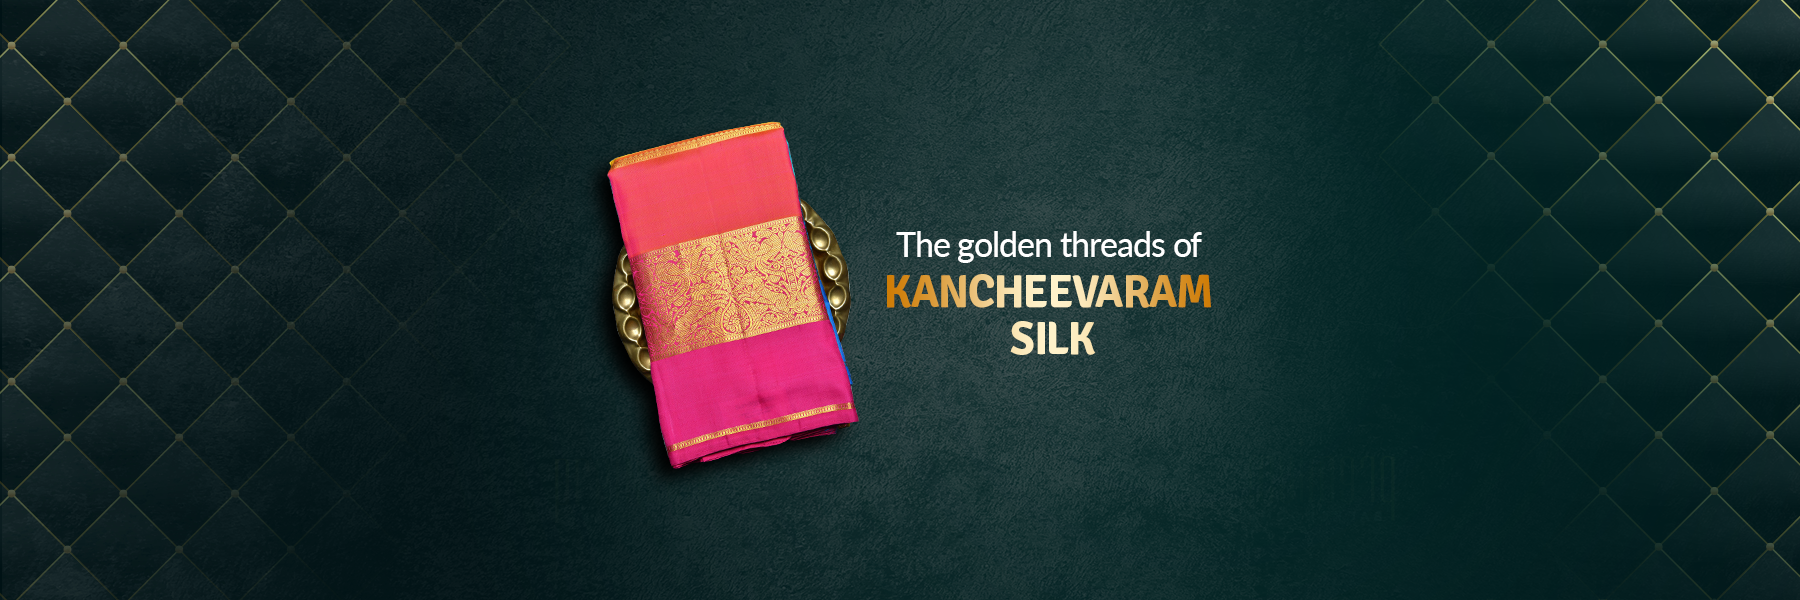 The Golden Threads of Kancheevaram Silk FromIndia.com